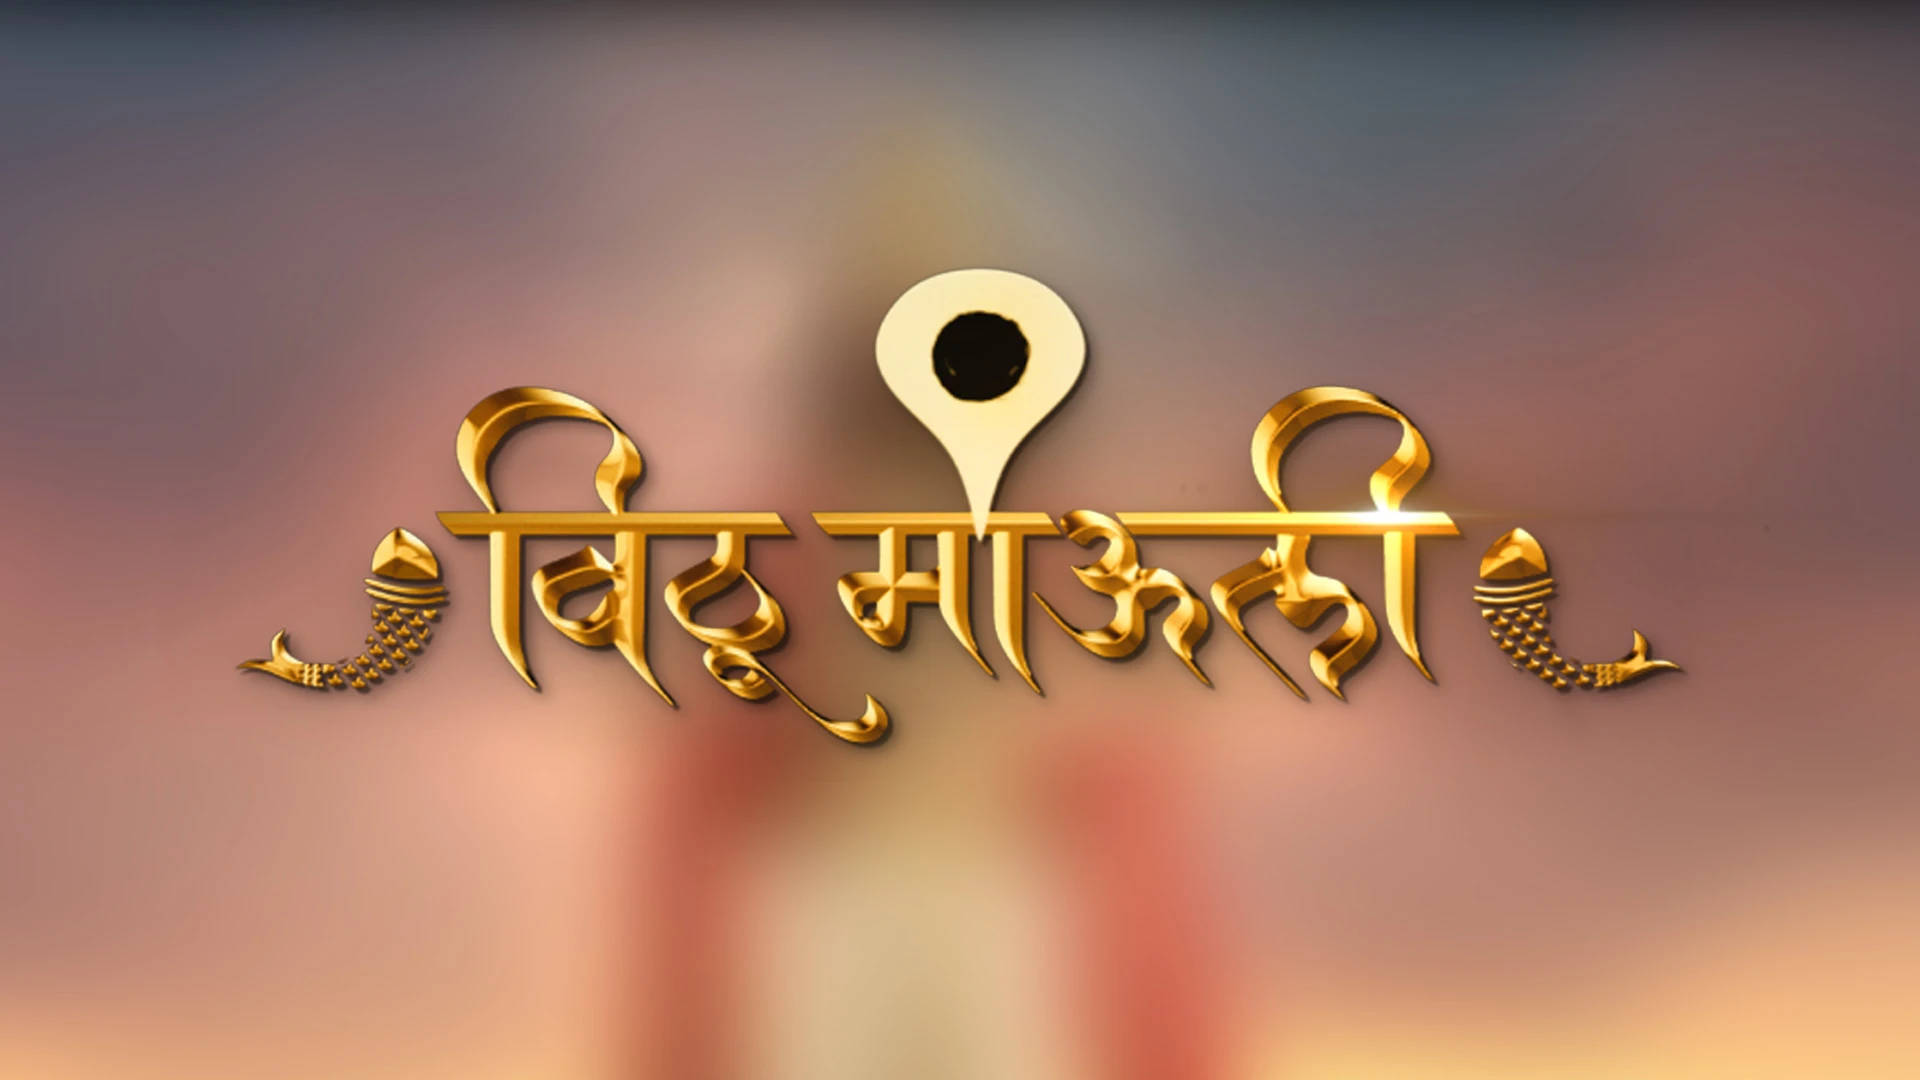 Vithu Mauli Show Logo Background